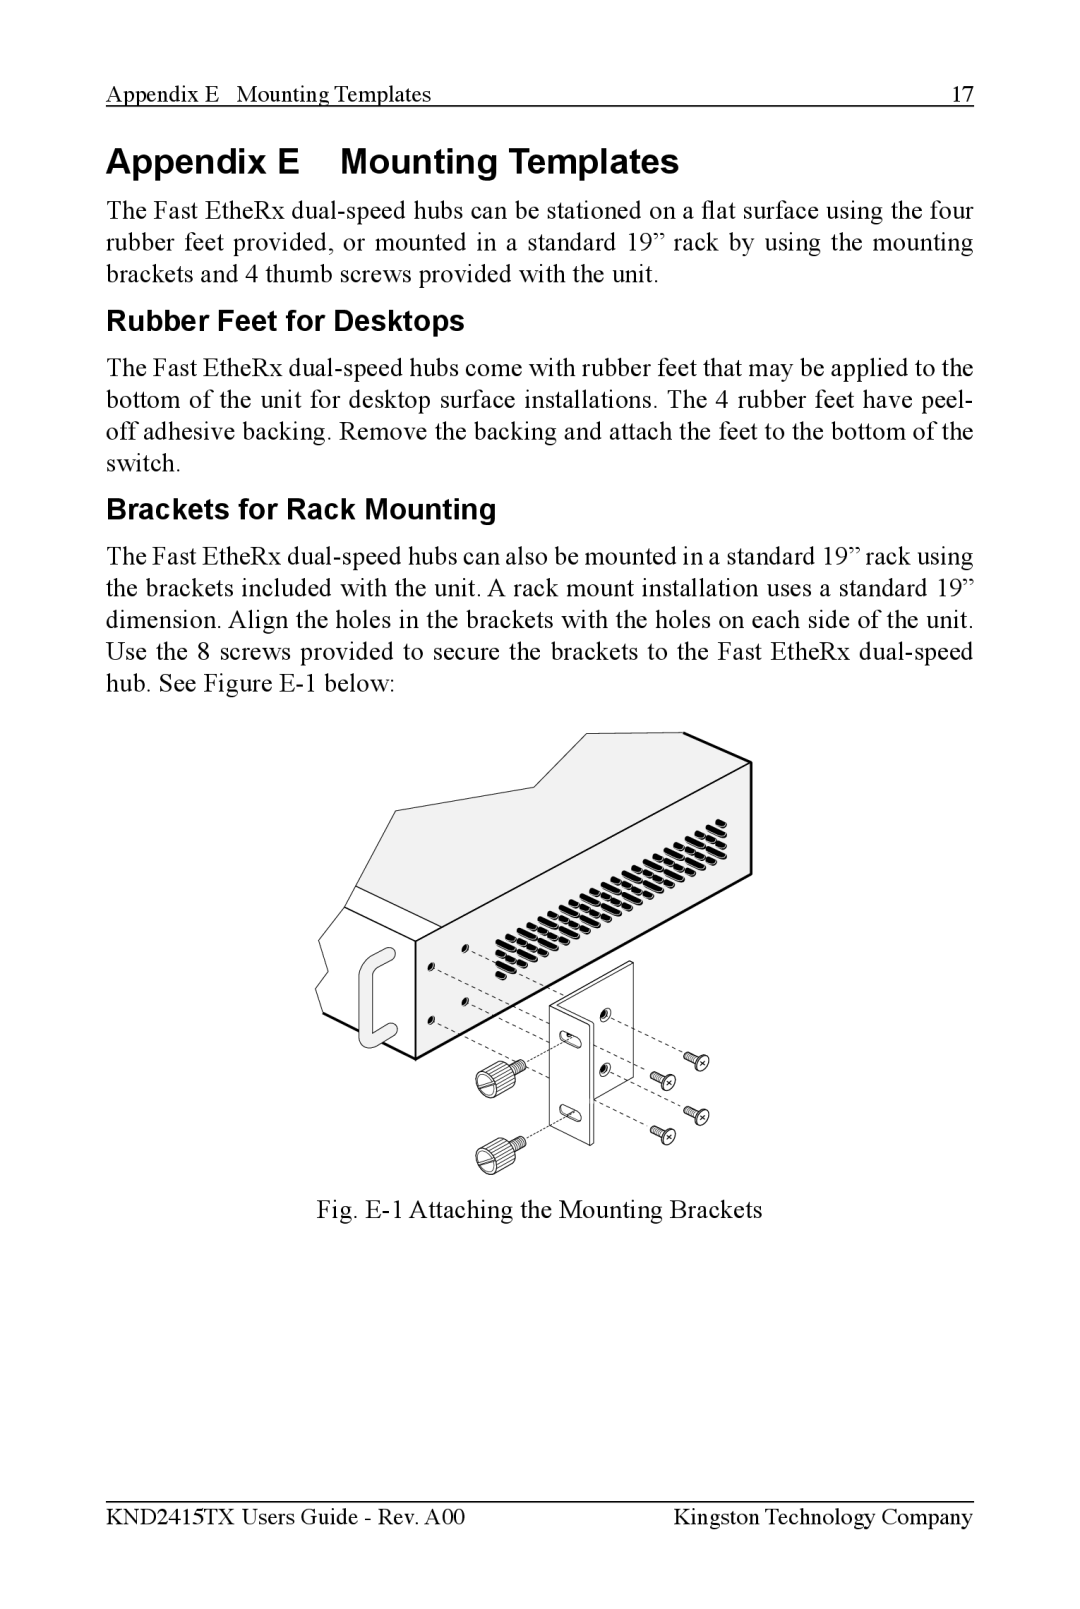 Kingston Technology KND2415TX manual Appendix E Mounting Templates, Rubber Feet for Desktops, Brackets for Rack Mounting 